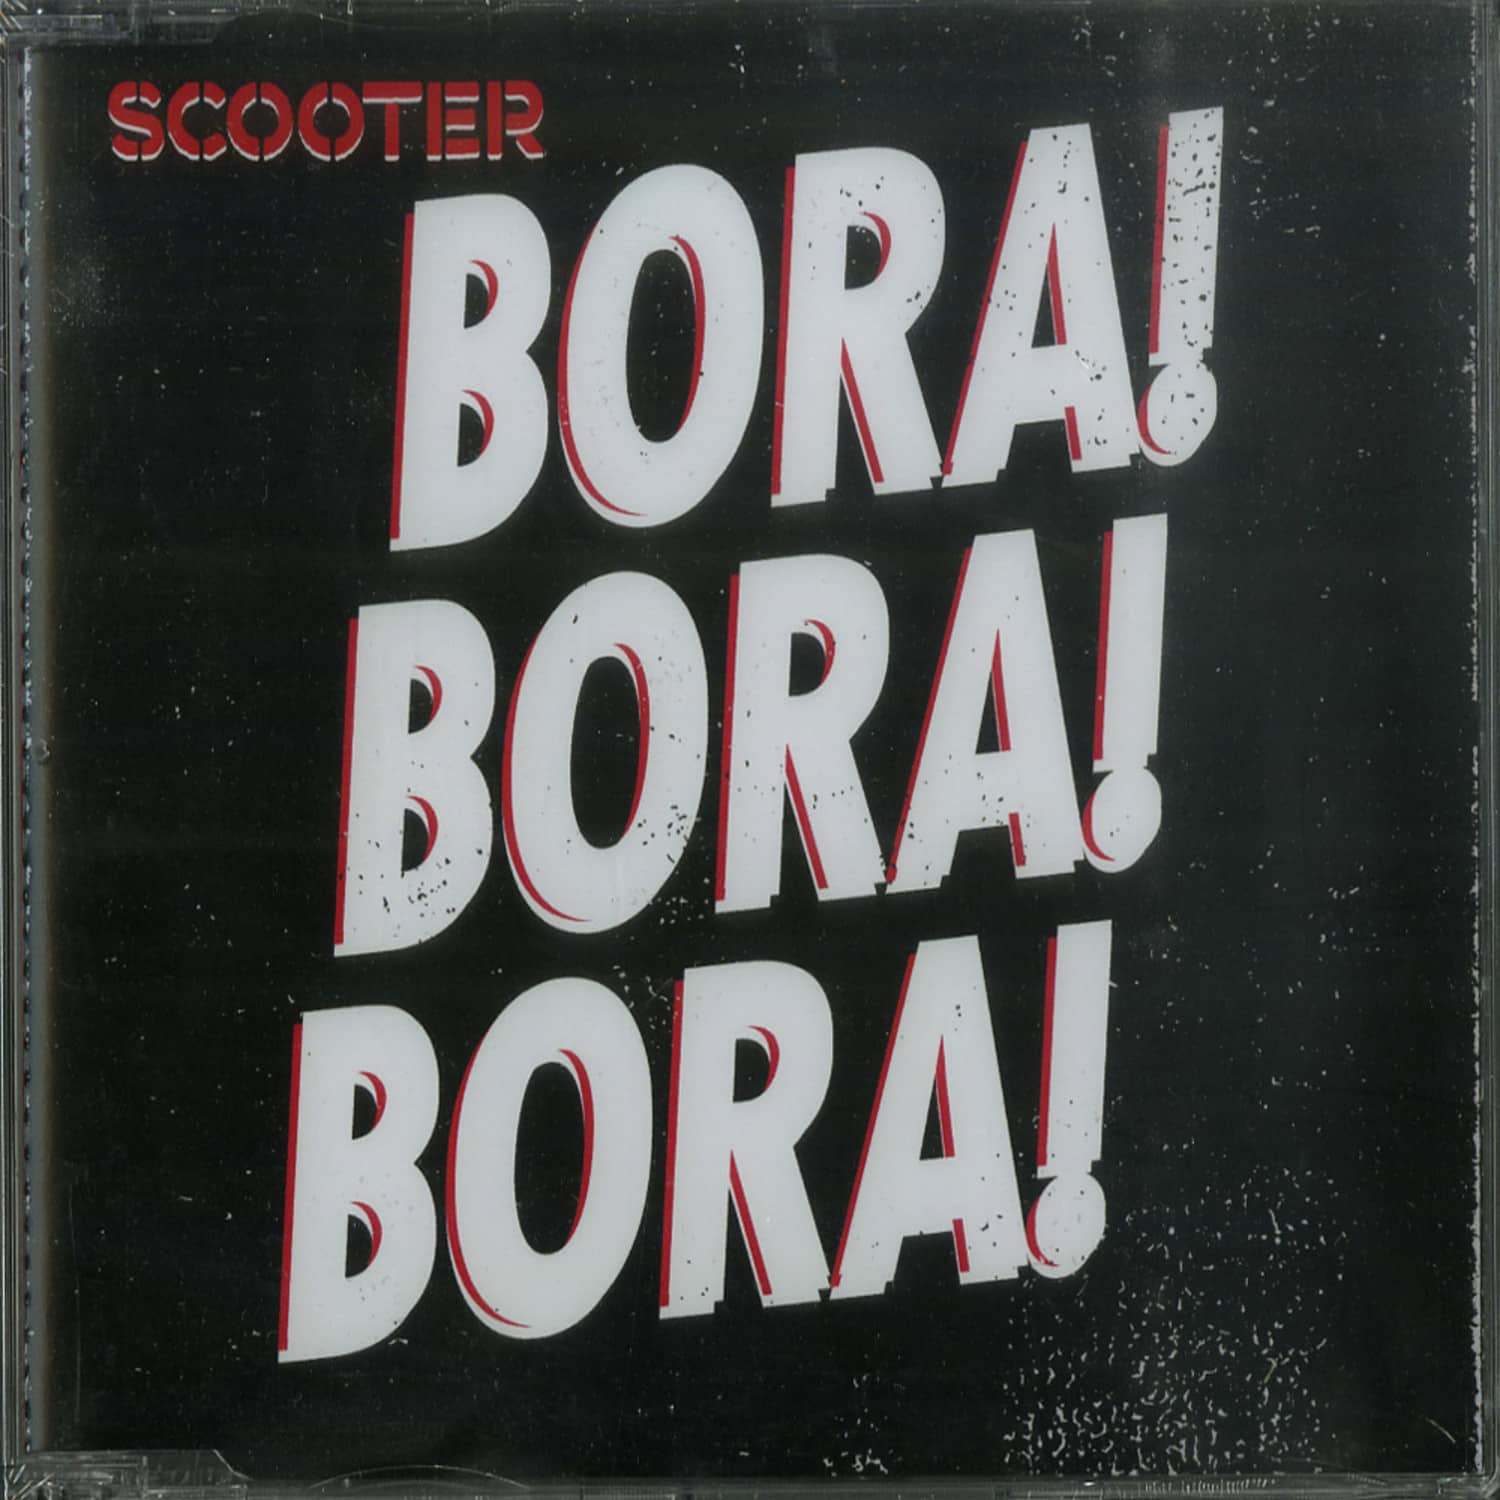 Scooter - BORA BORA BORA 